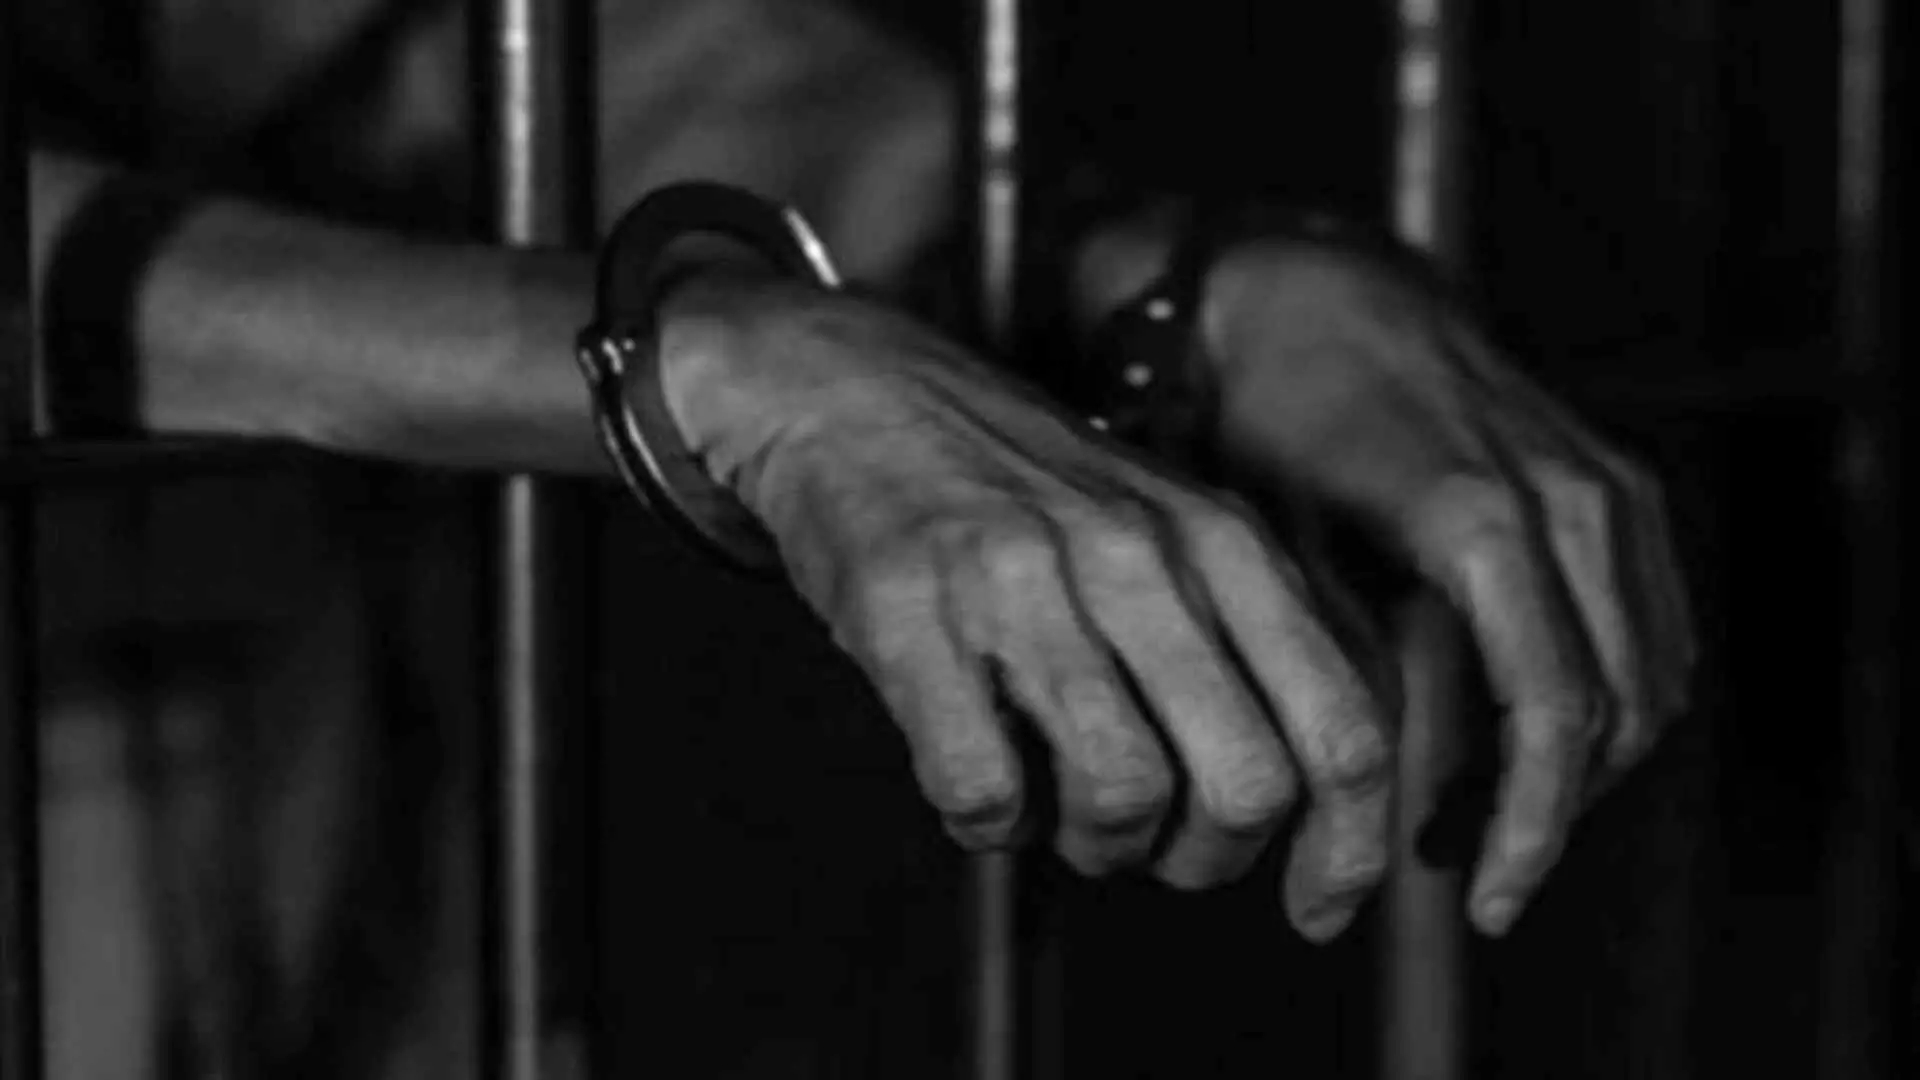 Special remission programme: प्रजासत्ताक दिनी महाराष्ट्राच्या तुरूंगातून १८९ कैदी होणार मुक्त